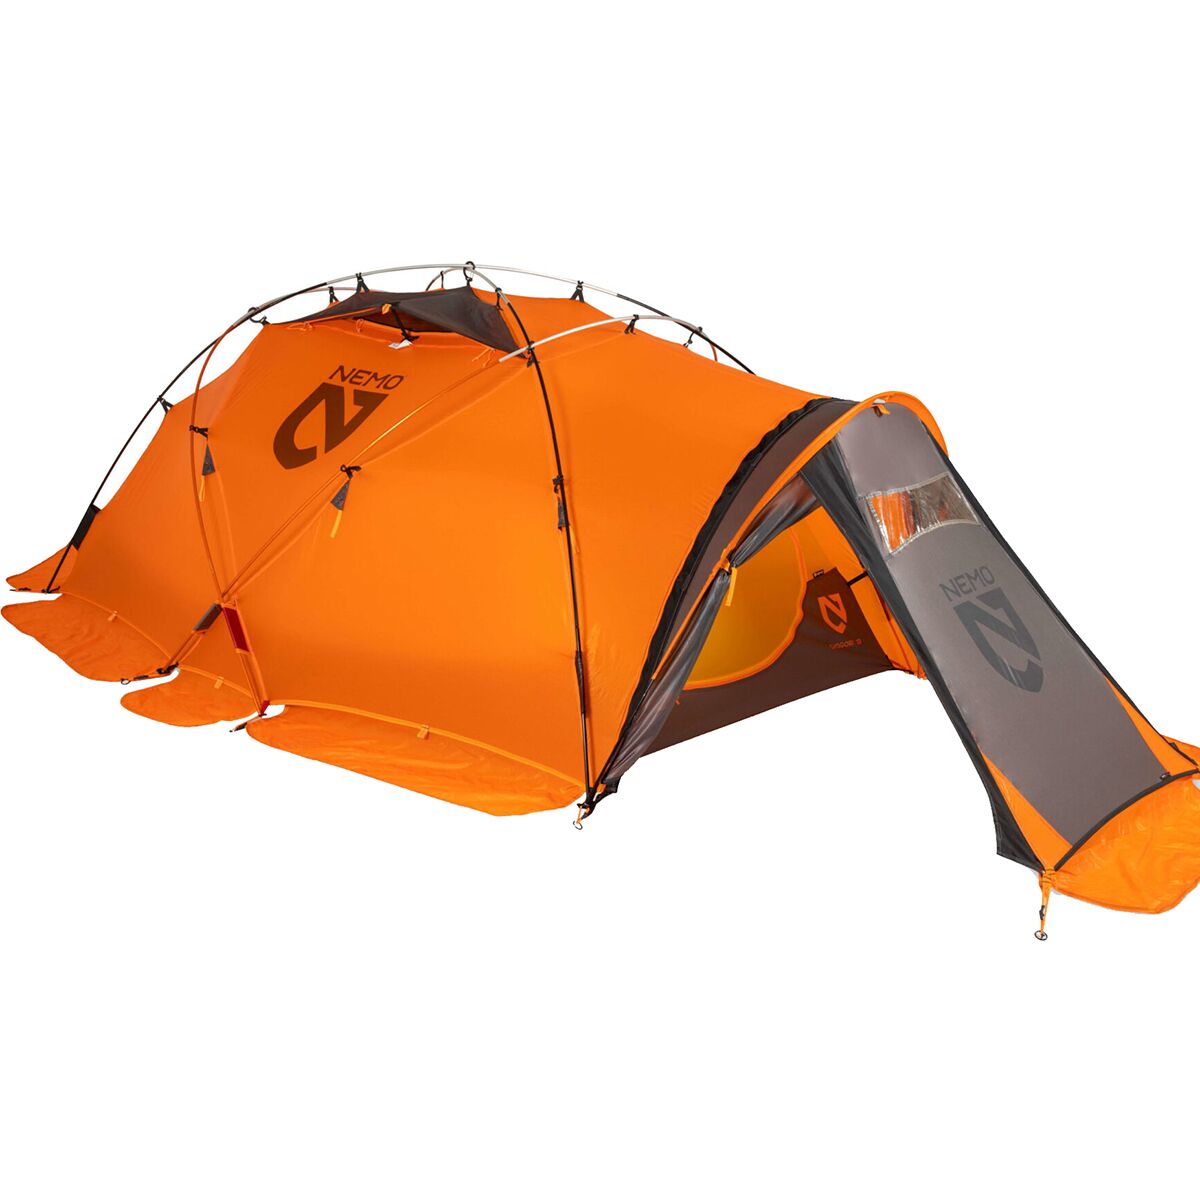 NEMO Equipment Inc. Chogori Mountaineering Tent: 2-Person 4-Season